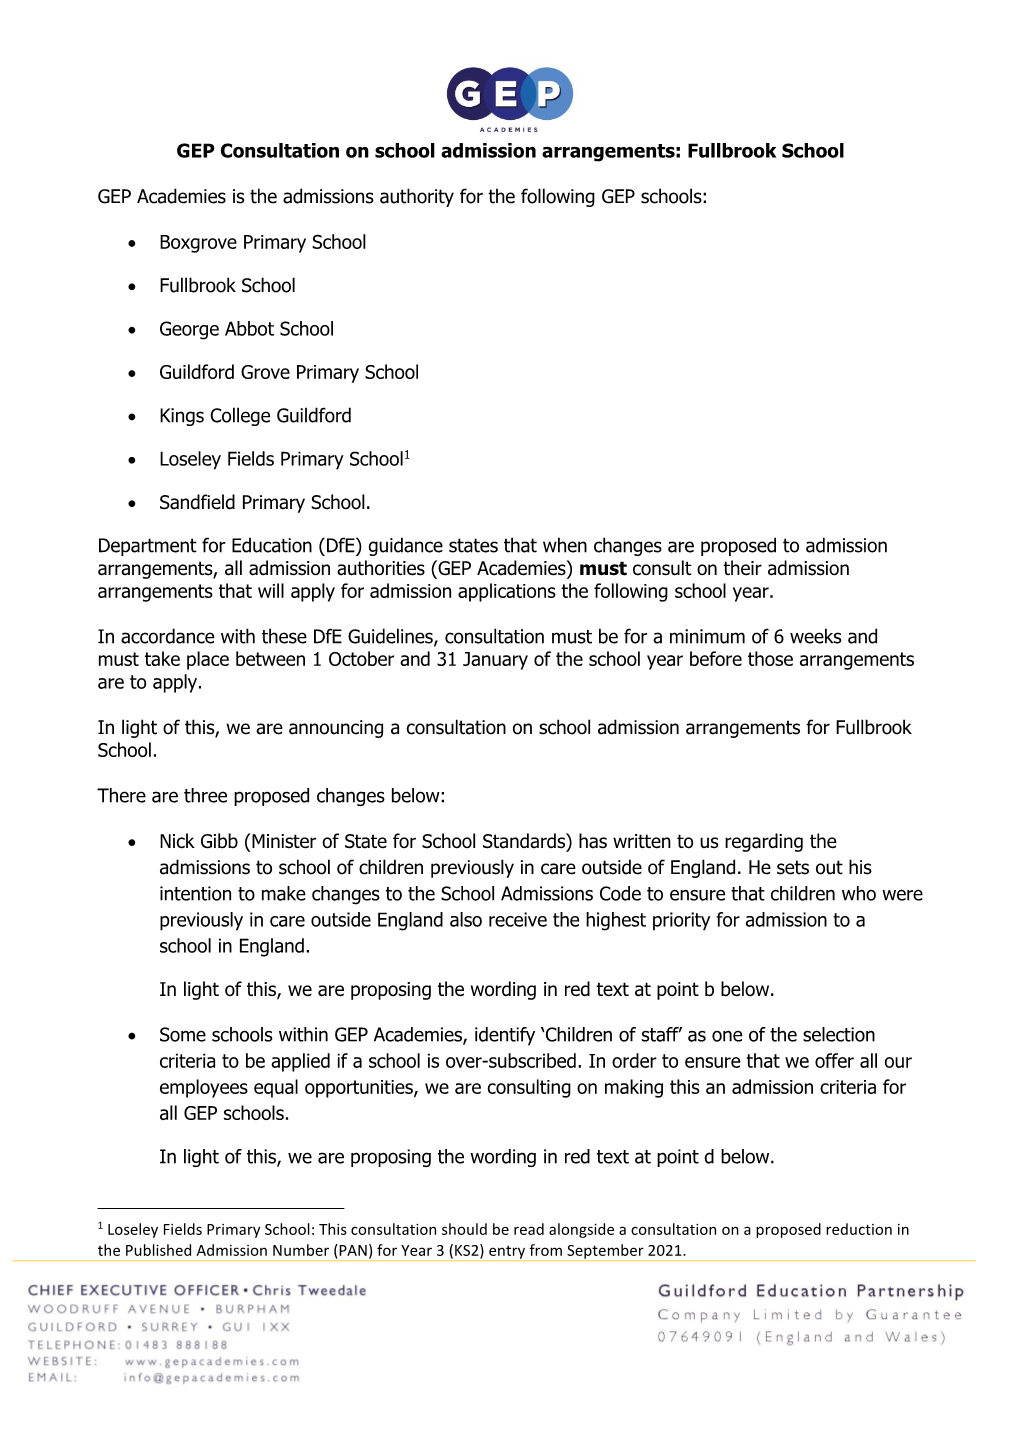 GEP Consultation on School Admission Arrangements: Fullbrook School